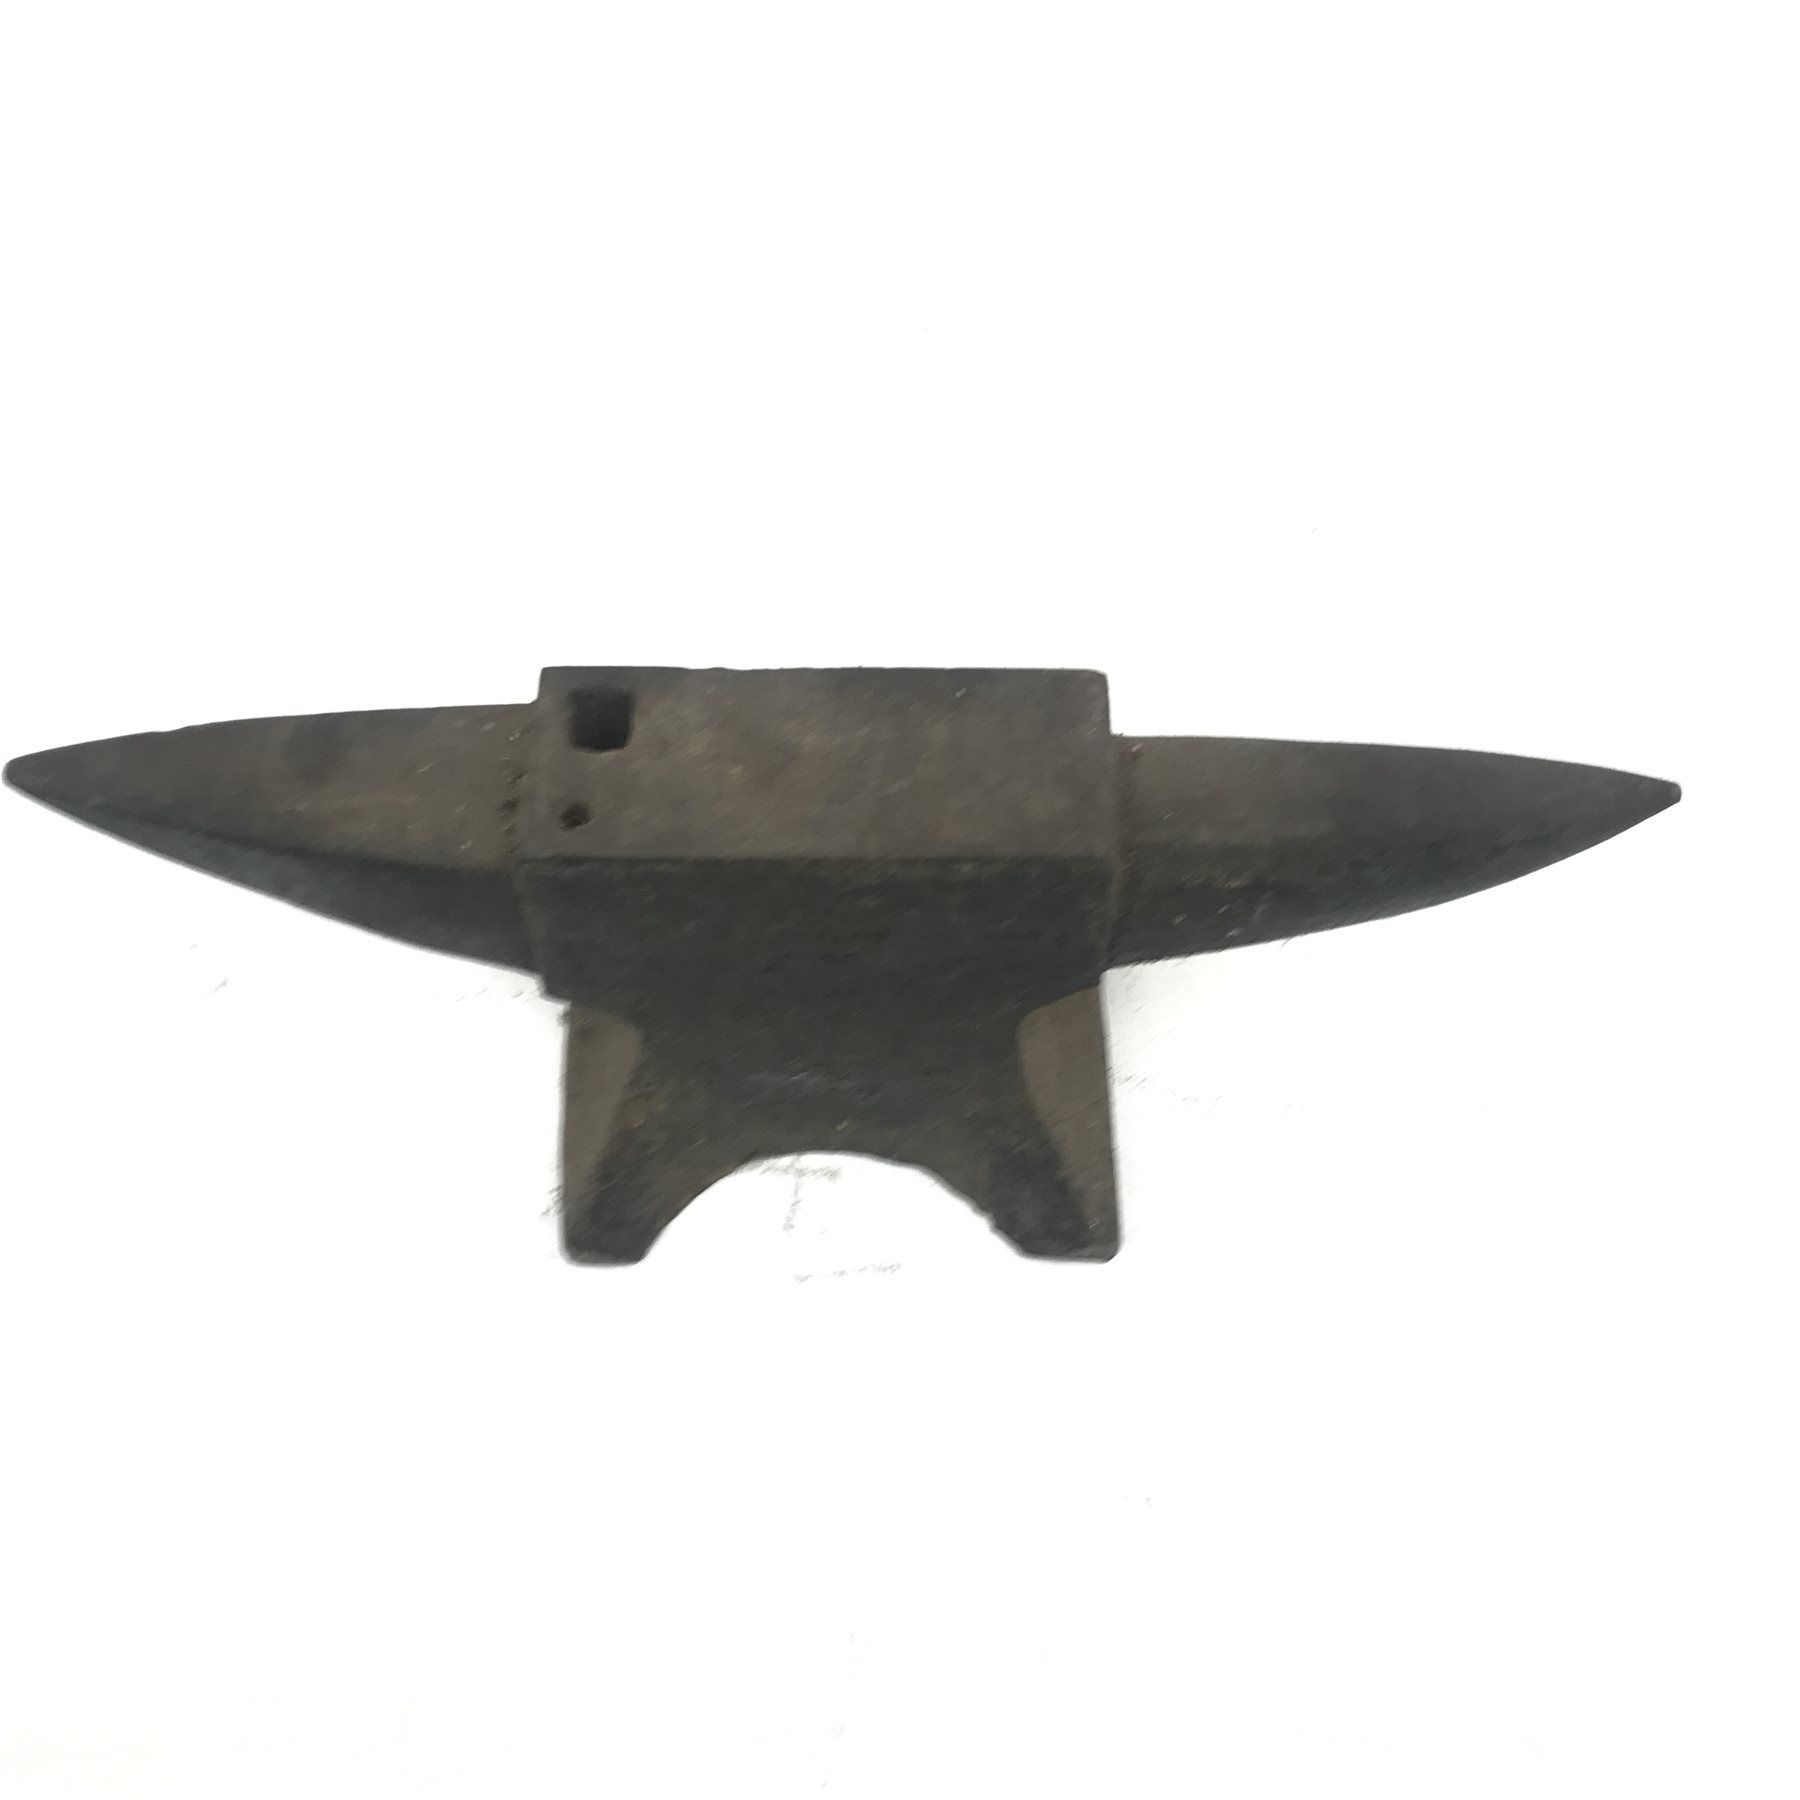 Small cast iron Blacksmith's anvil, L53cm - Image 3 of 6